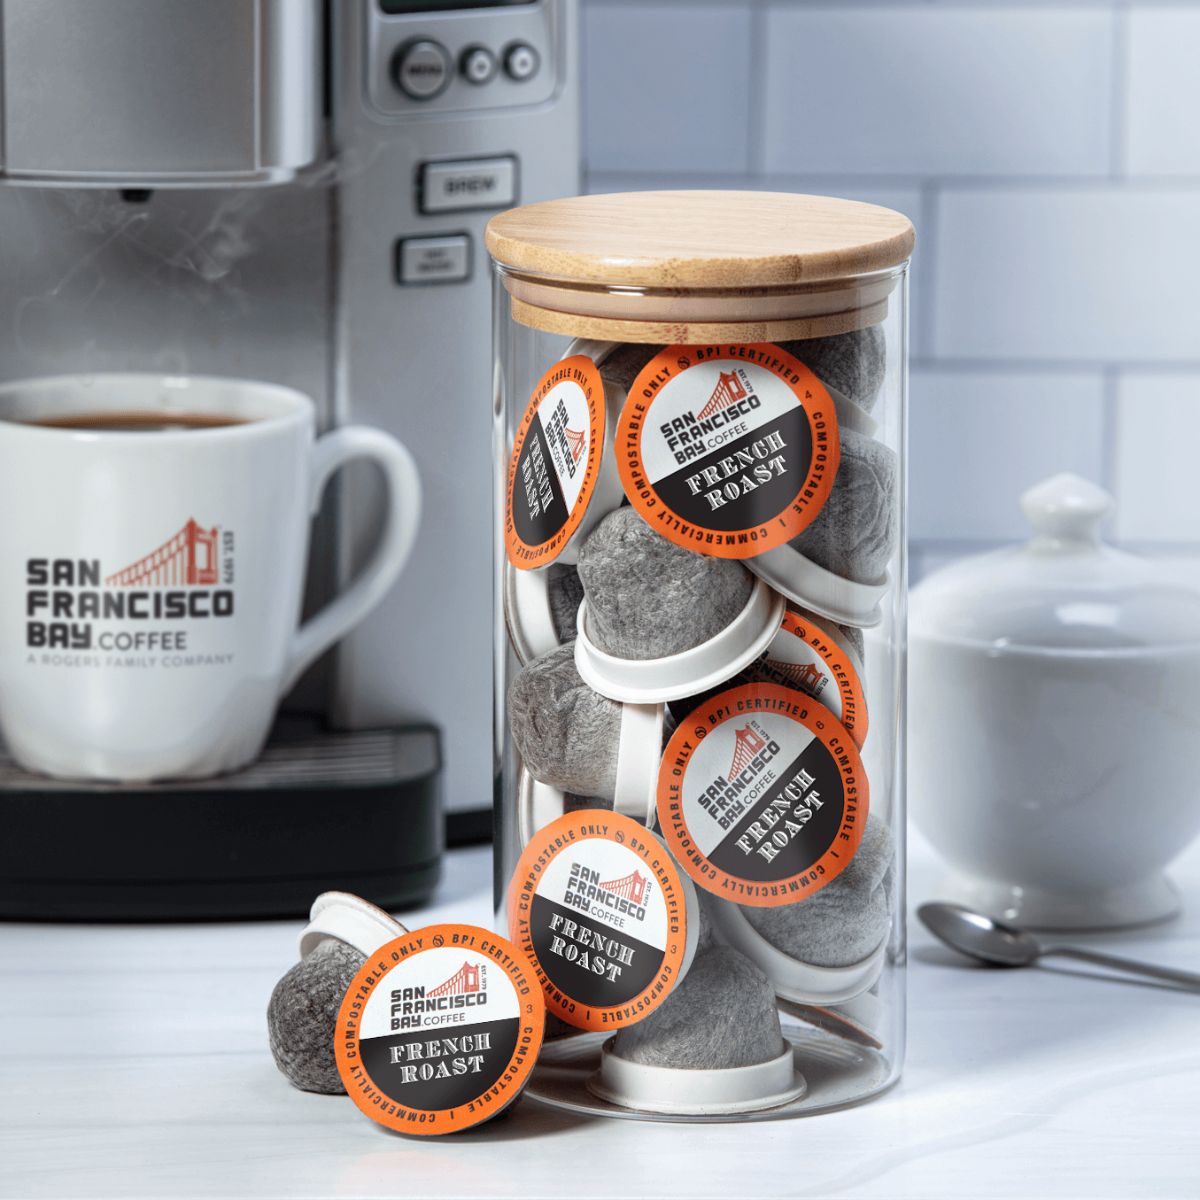 InstaBrew Launches Innovative Coffee and Tea Cubes - La Familia de Broward